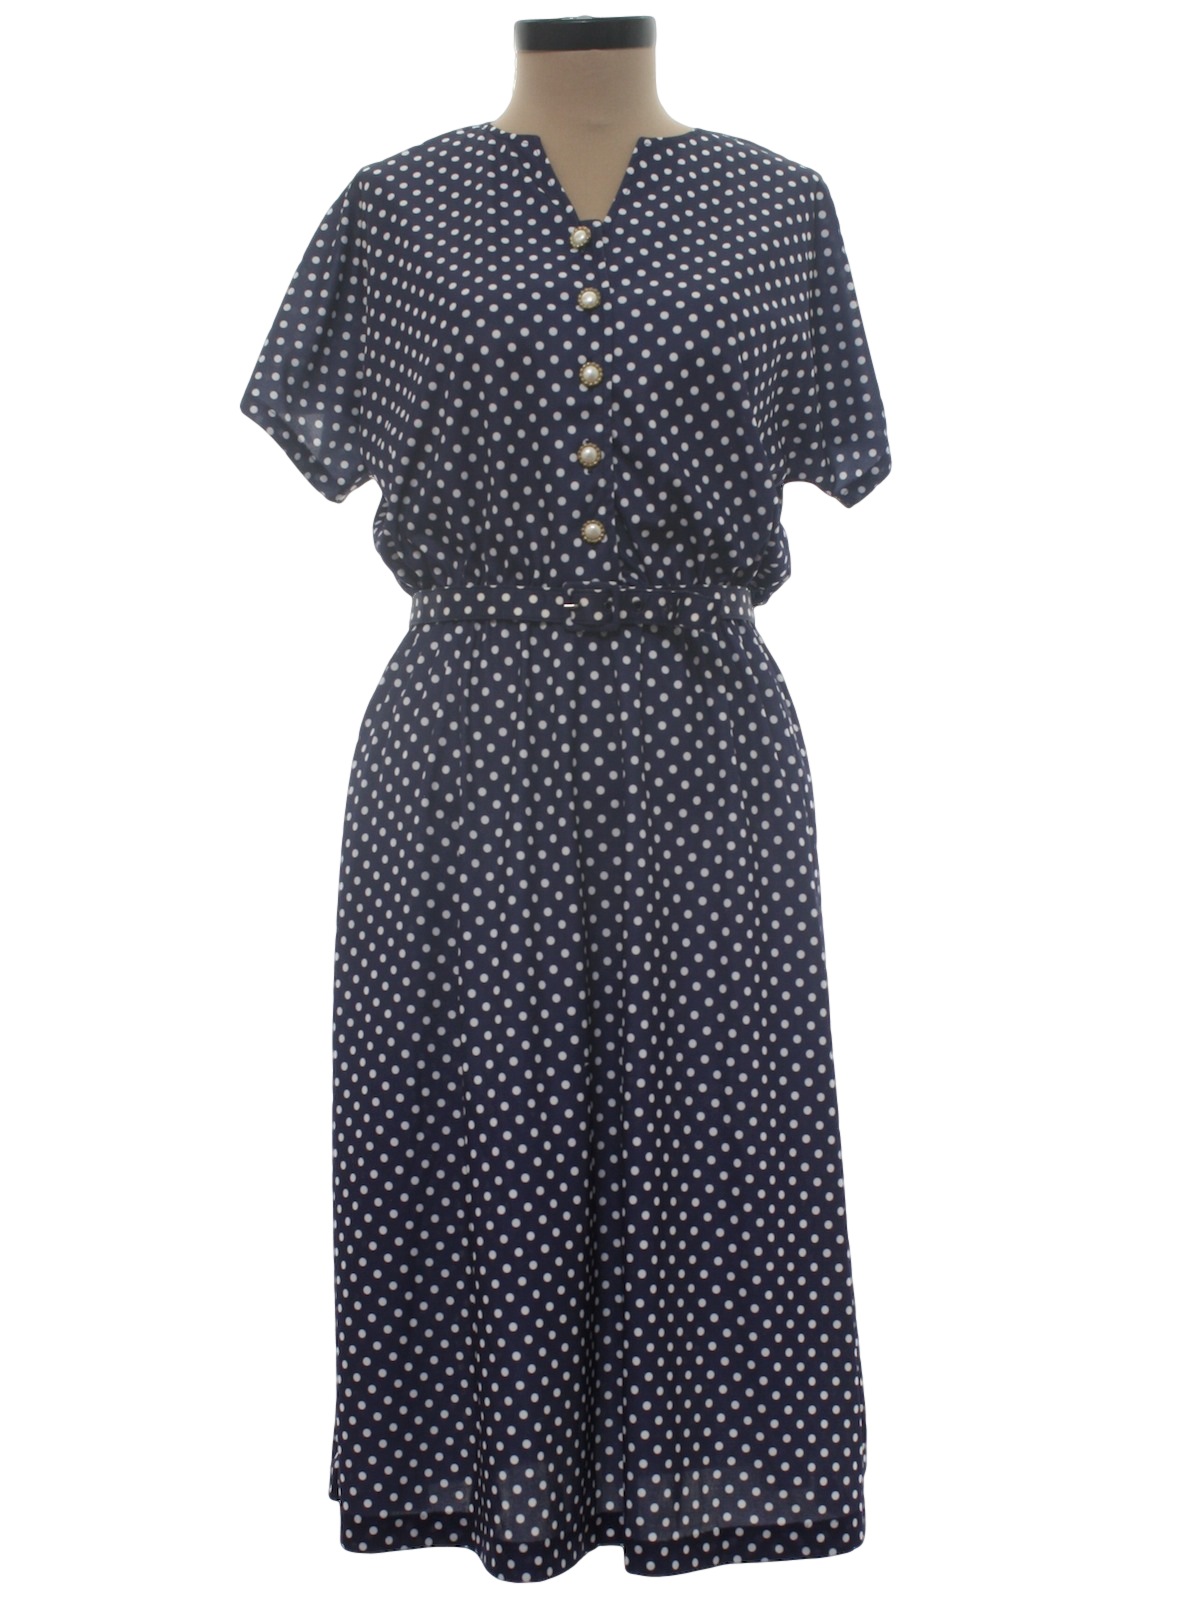 Blair 1980s Vintage Dress: 80s -Blair- Womens navy blue with white ...